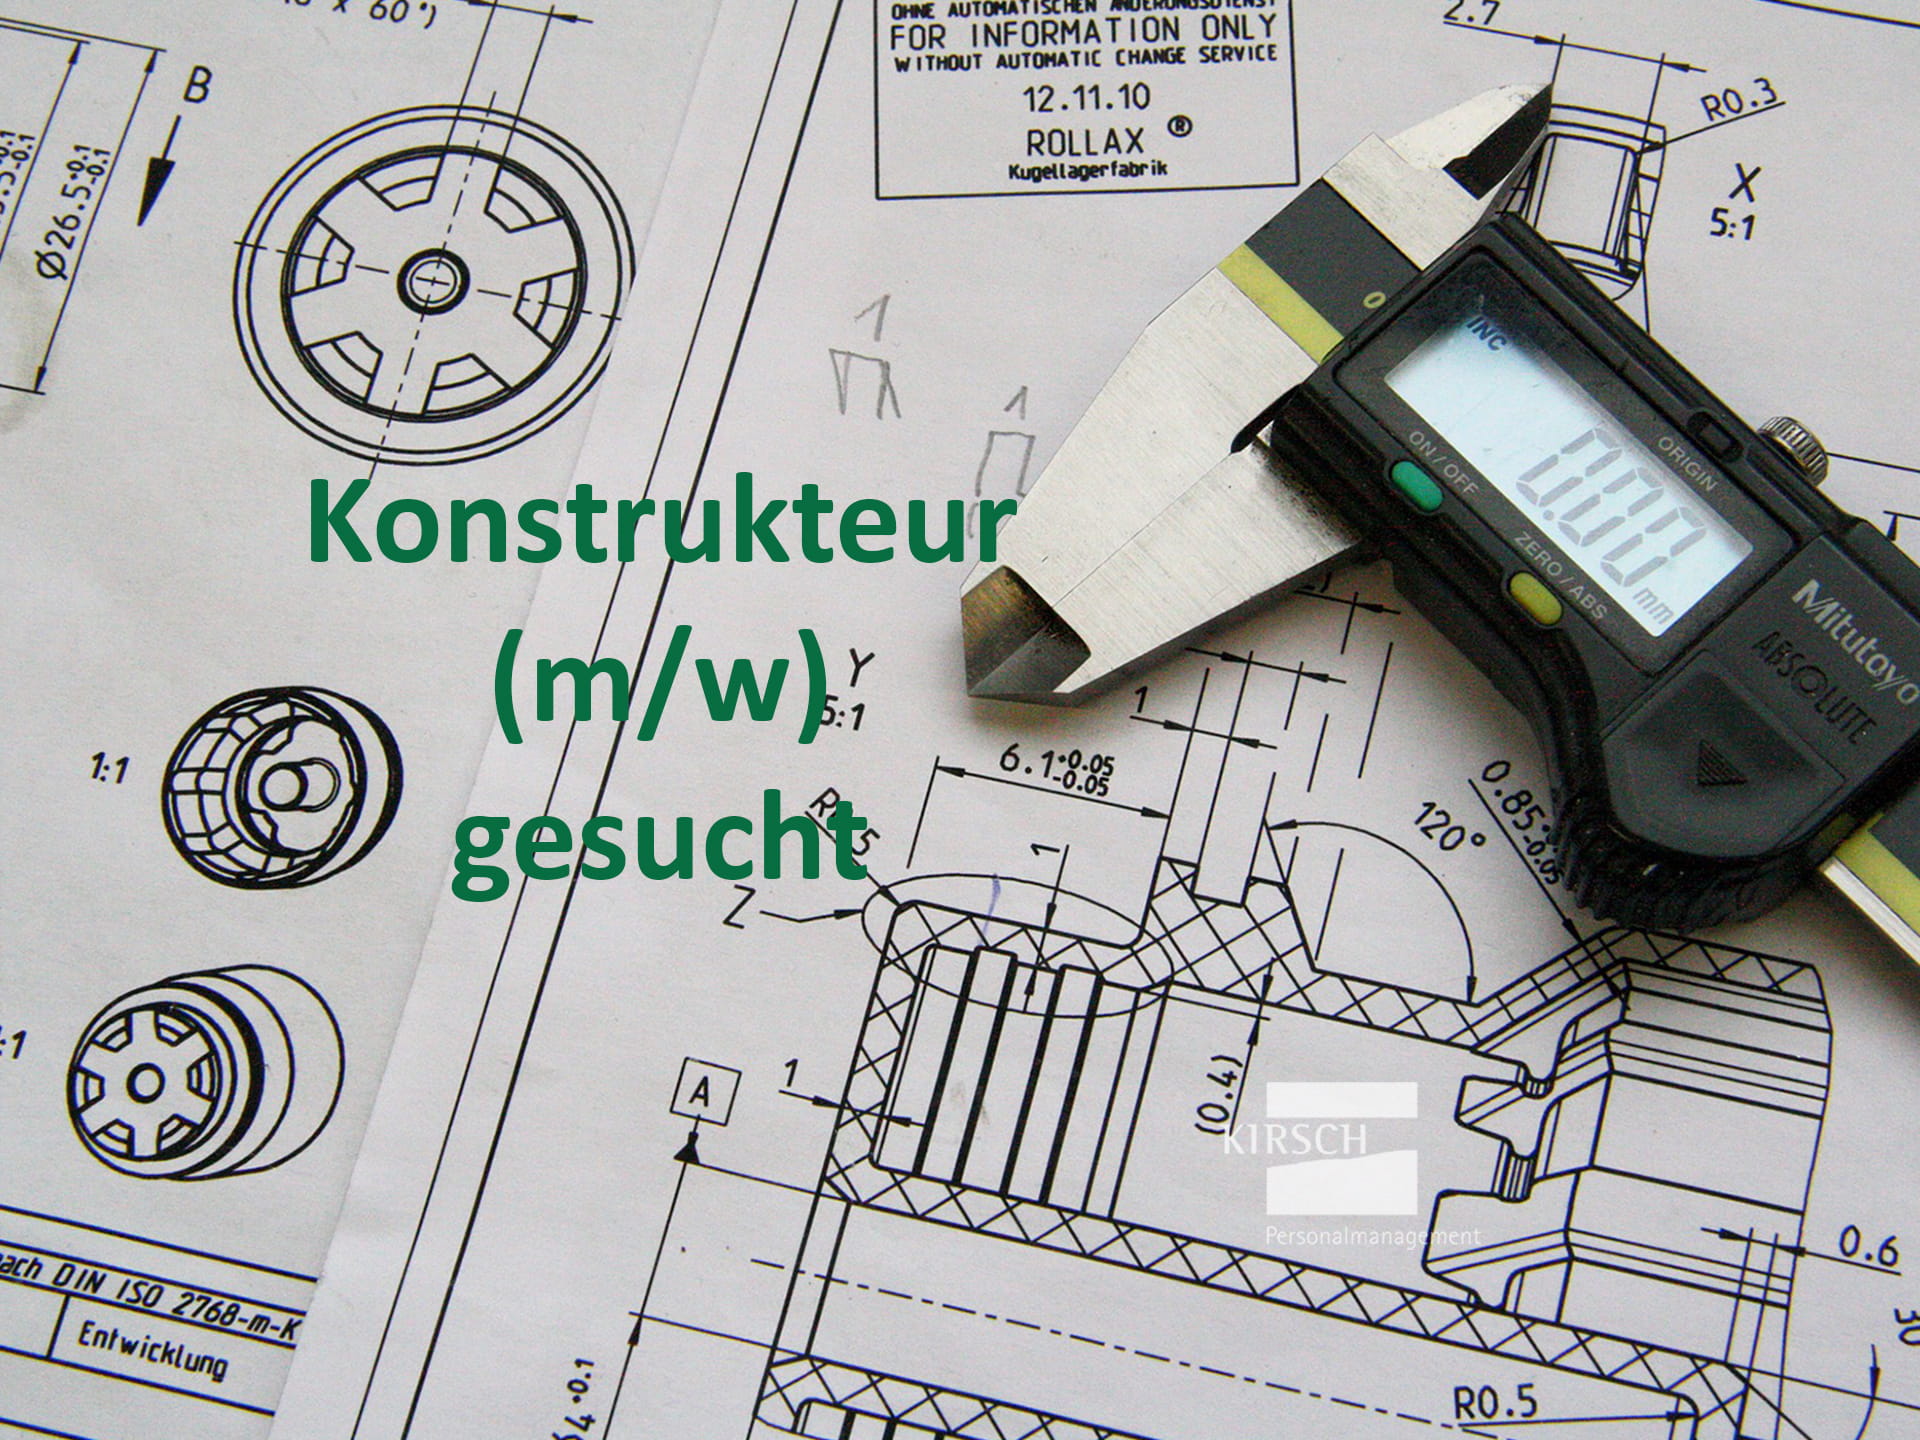 Konstrukteur gesucht - Kirsch GmbH Personalmanagement